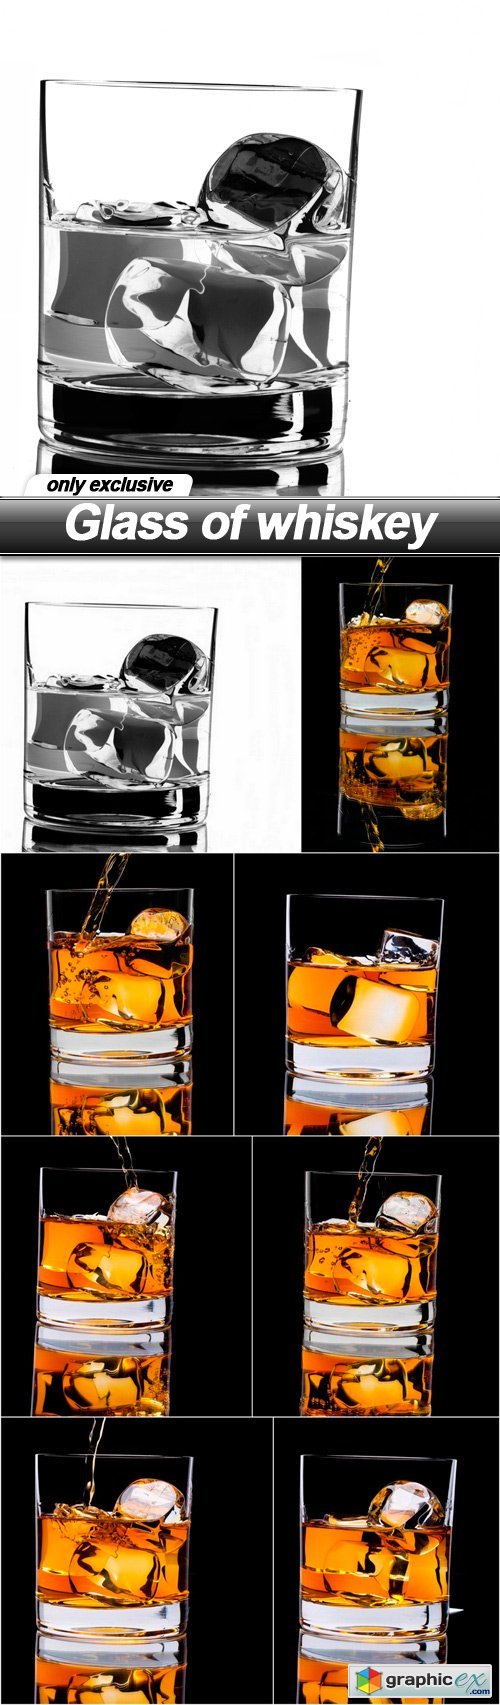 Glass of whiskey - 8 UHQ JPEG